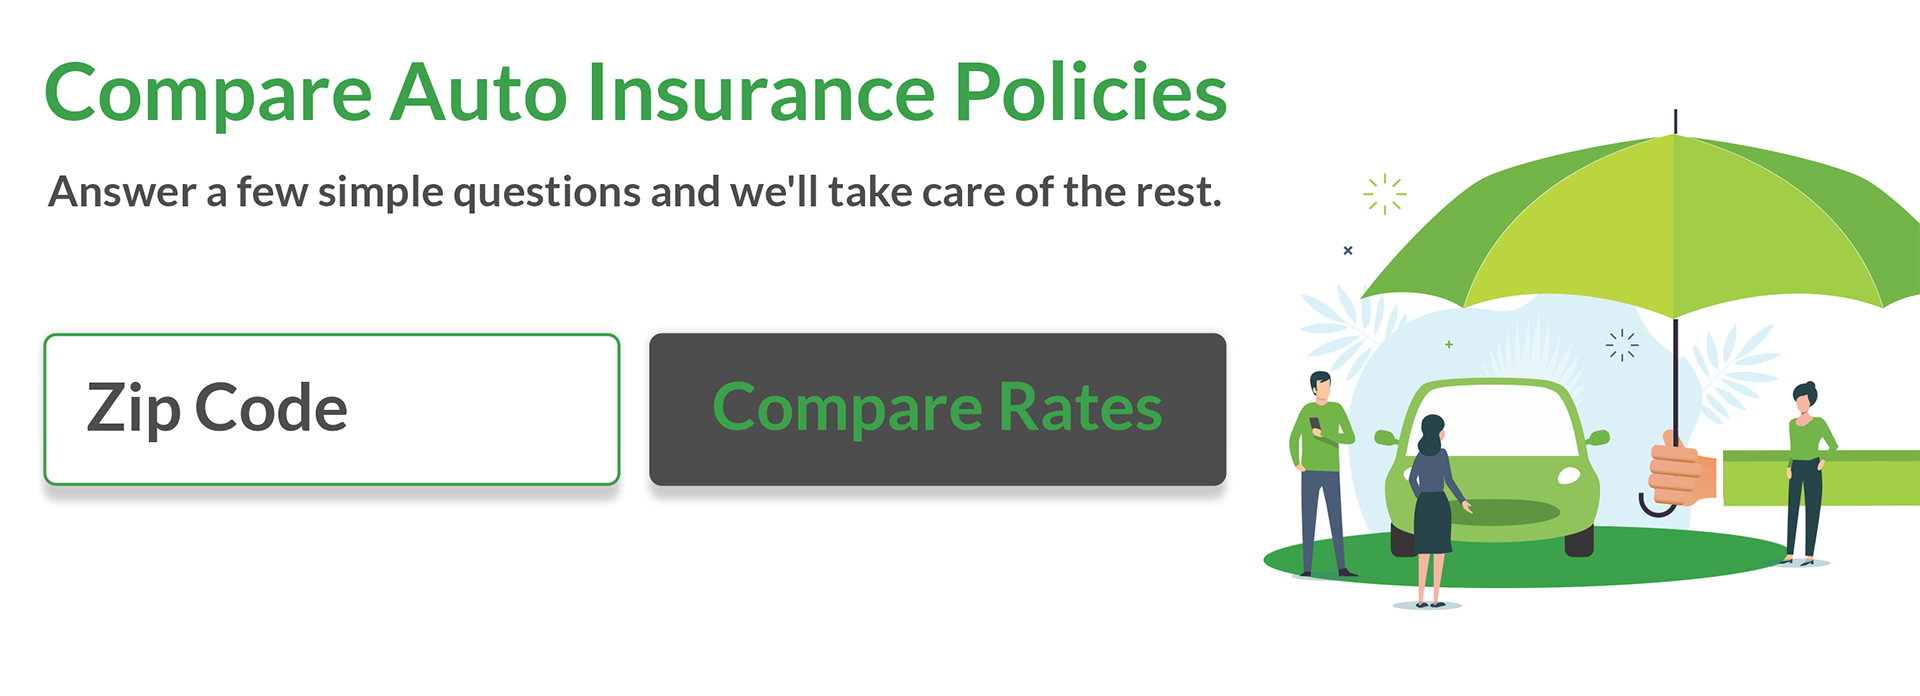 MW - Compare Auto Insurance PoliciesV4.png